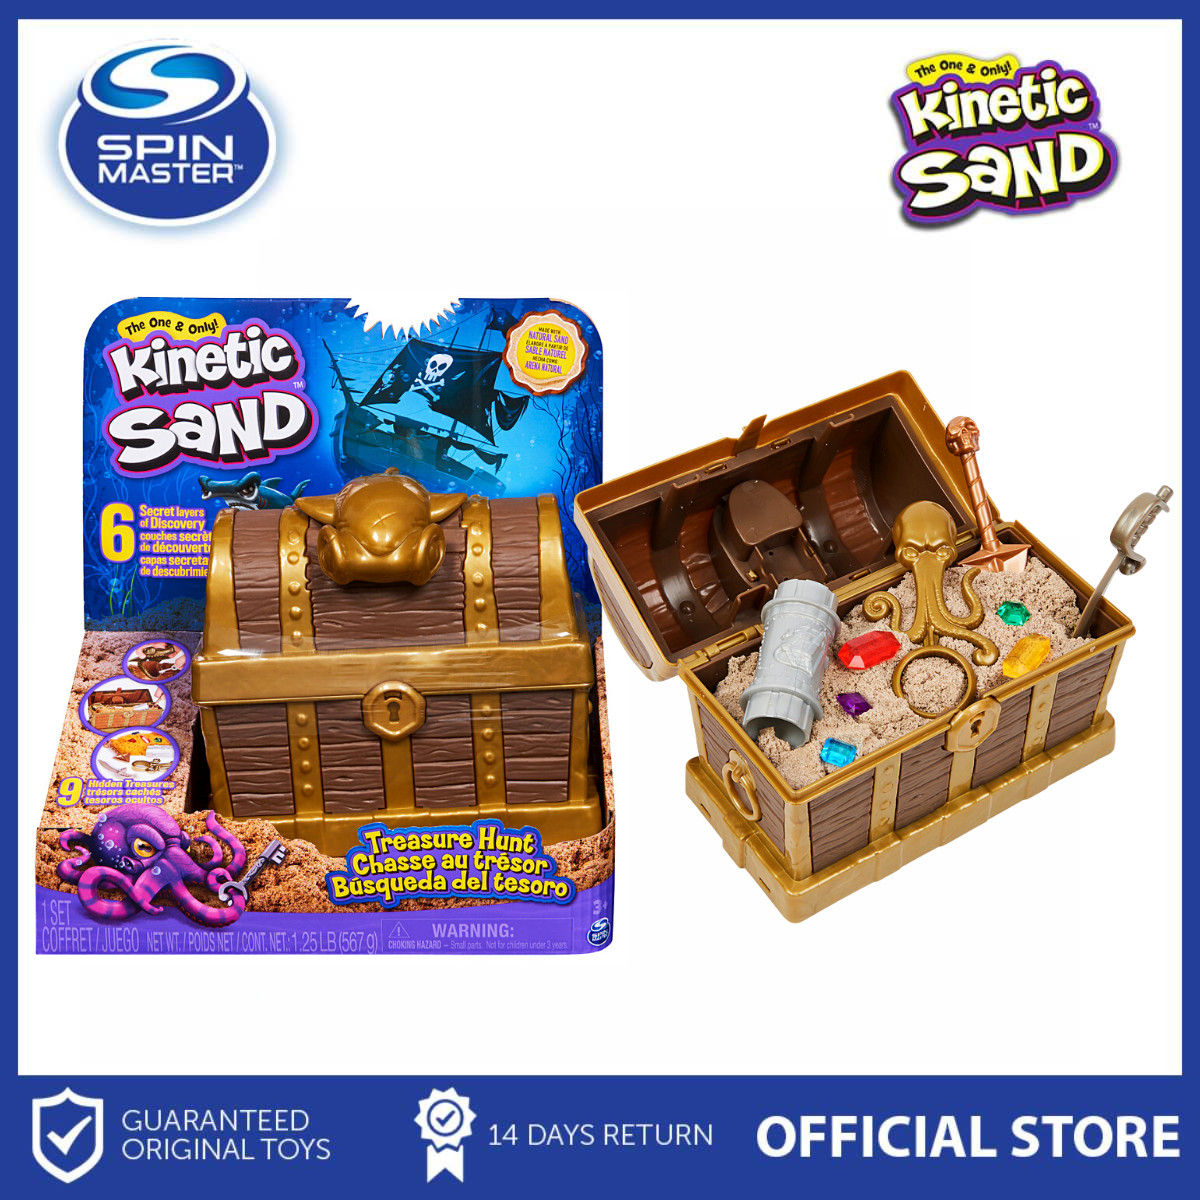 Kinetic Sand - Unicorn Bake Shoppe